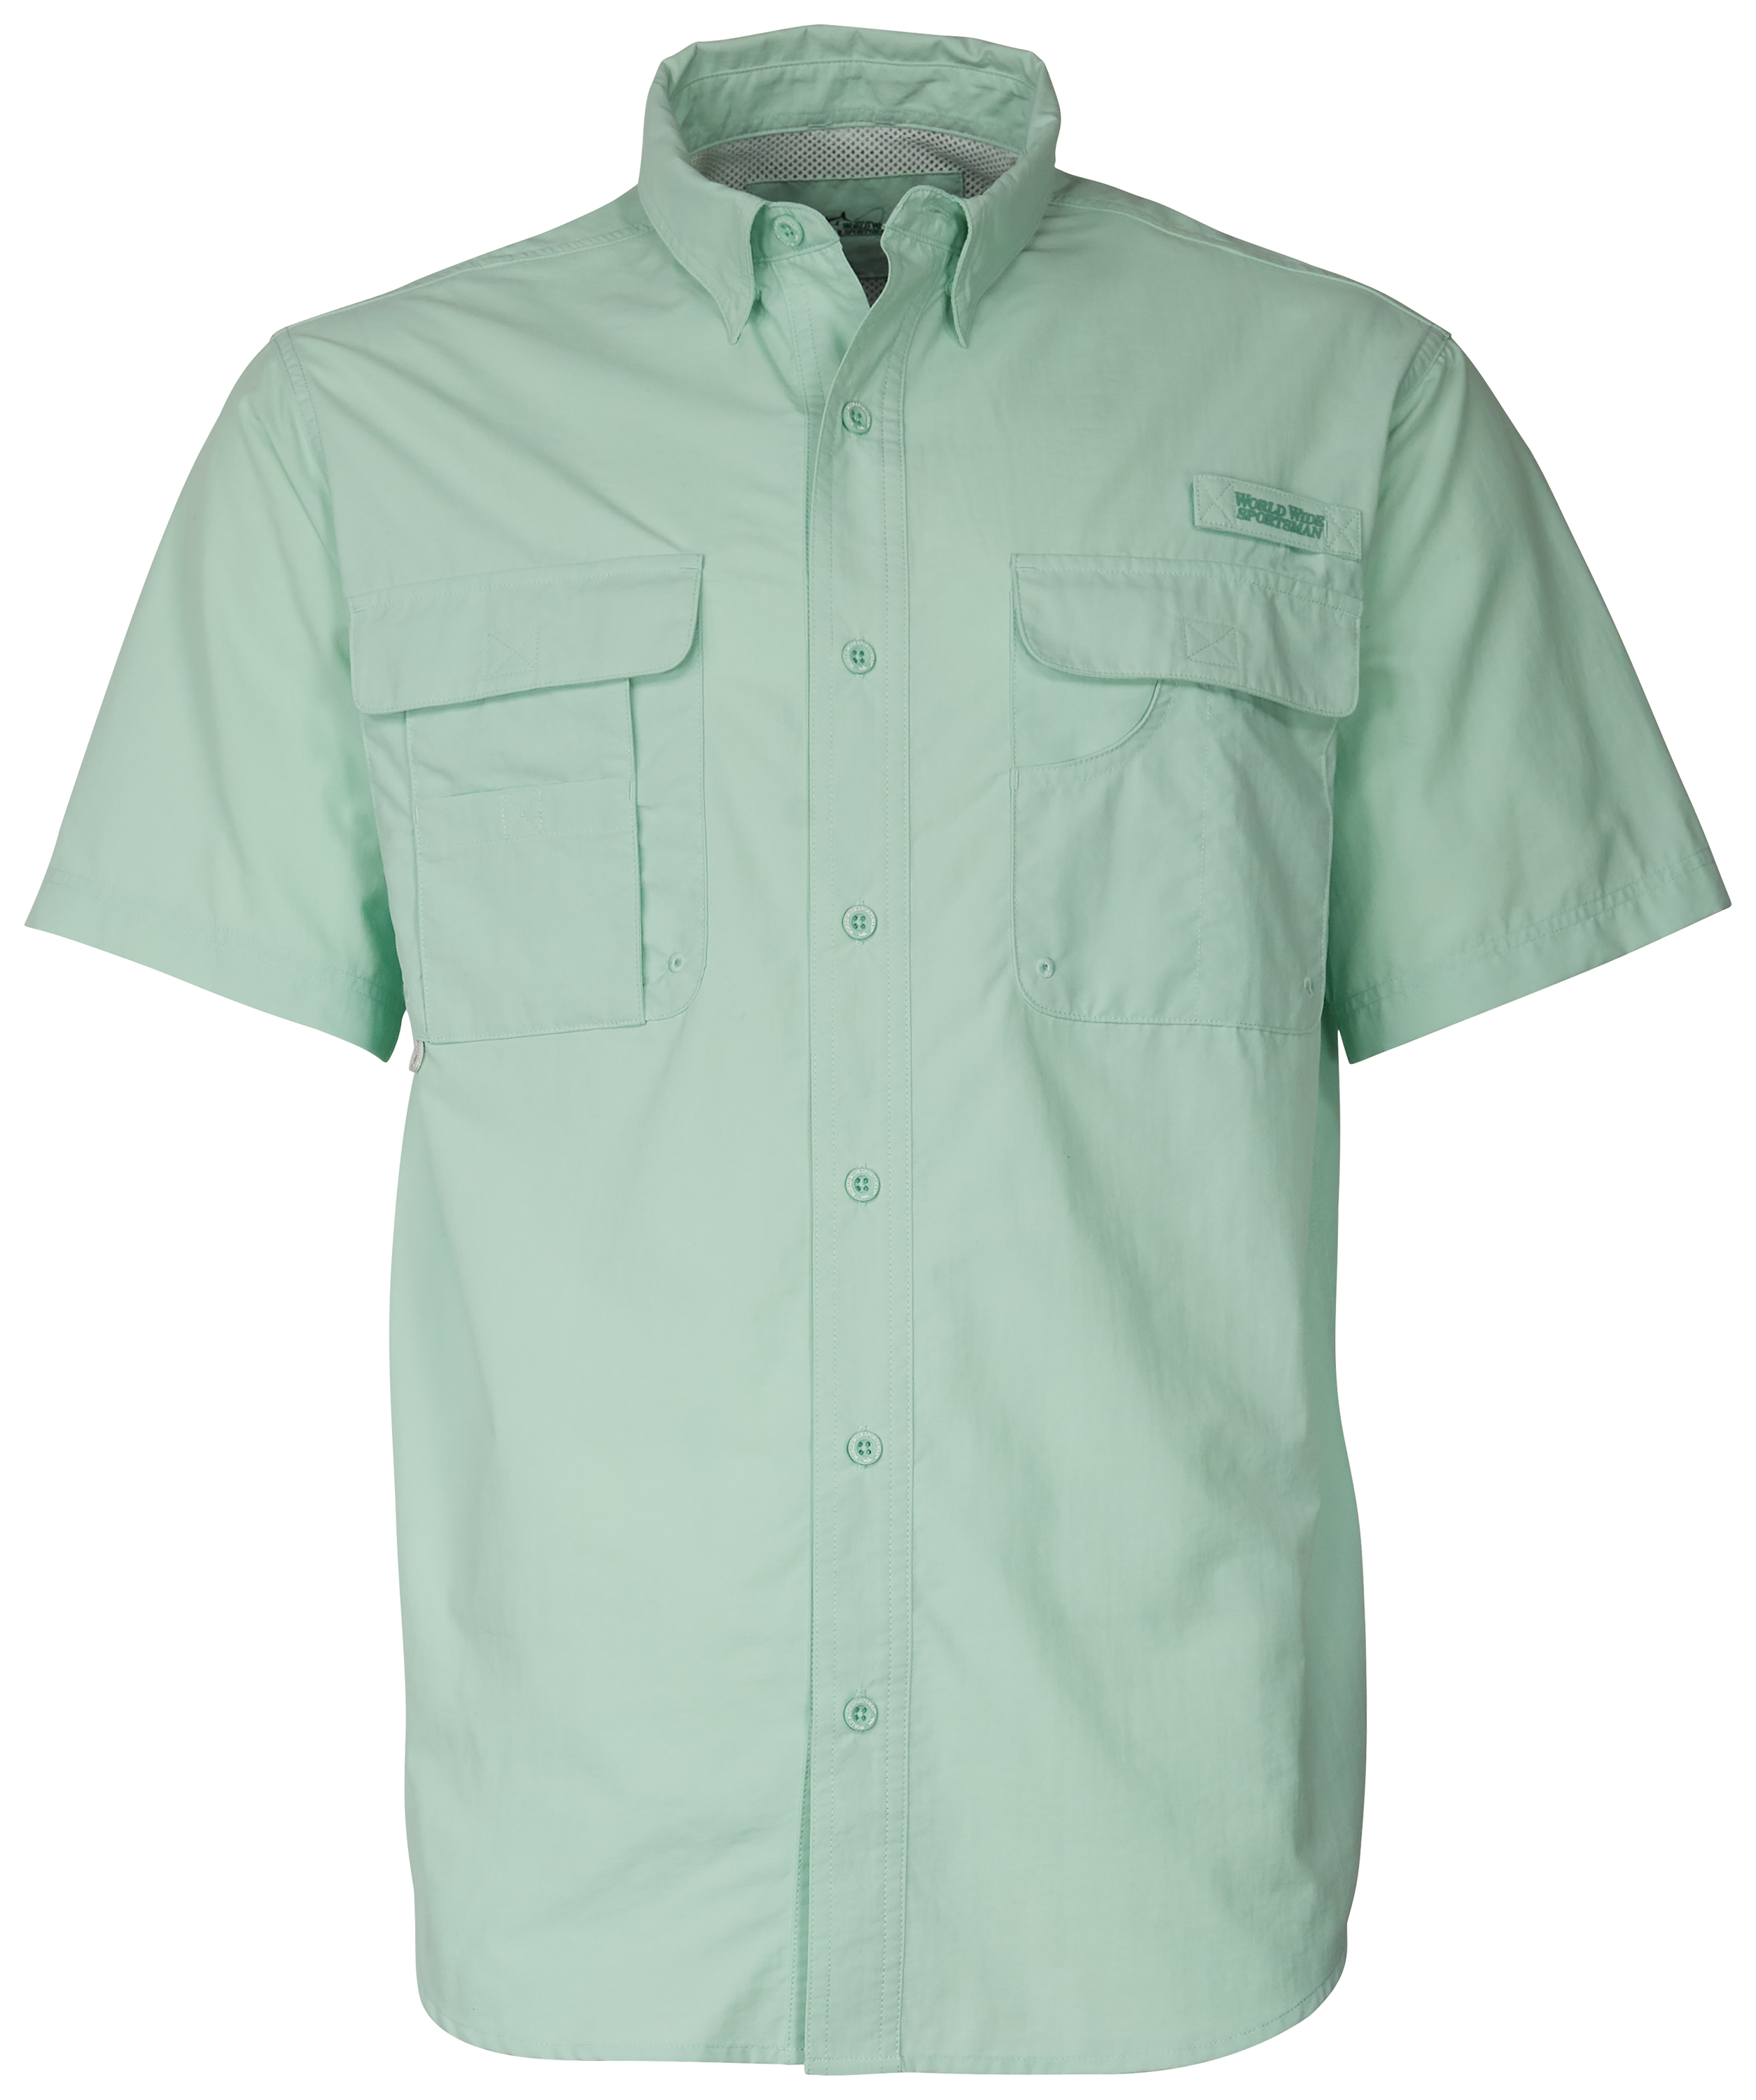 World Wide Sportsman Recycled-Nylon Angler 2.0 Short-Sleeve Button-Down Shirt for Men - Lichen - 3XL